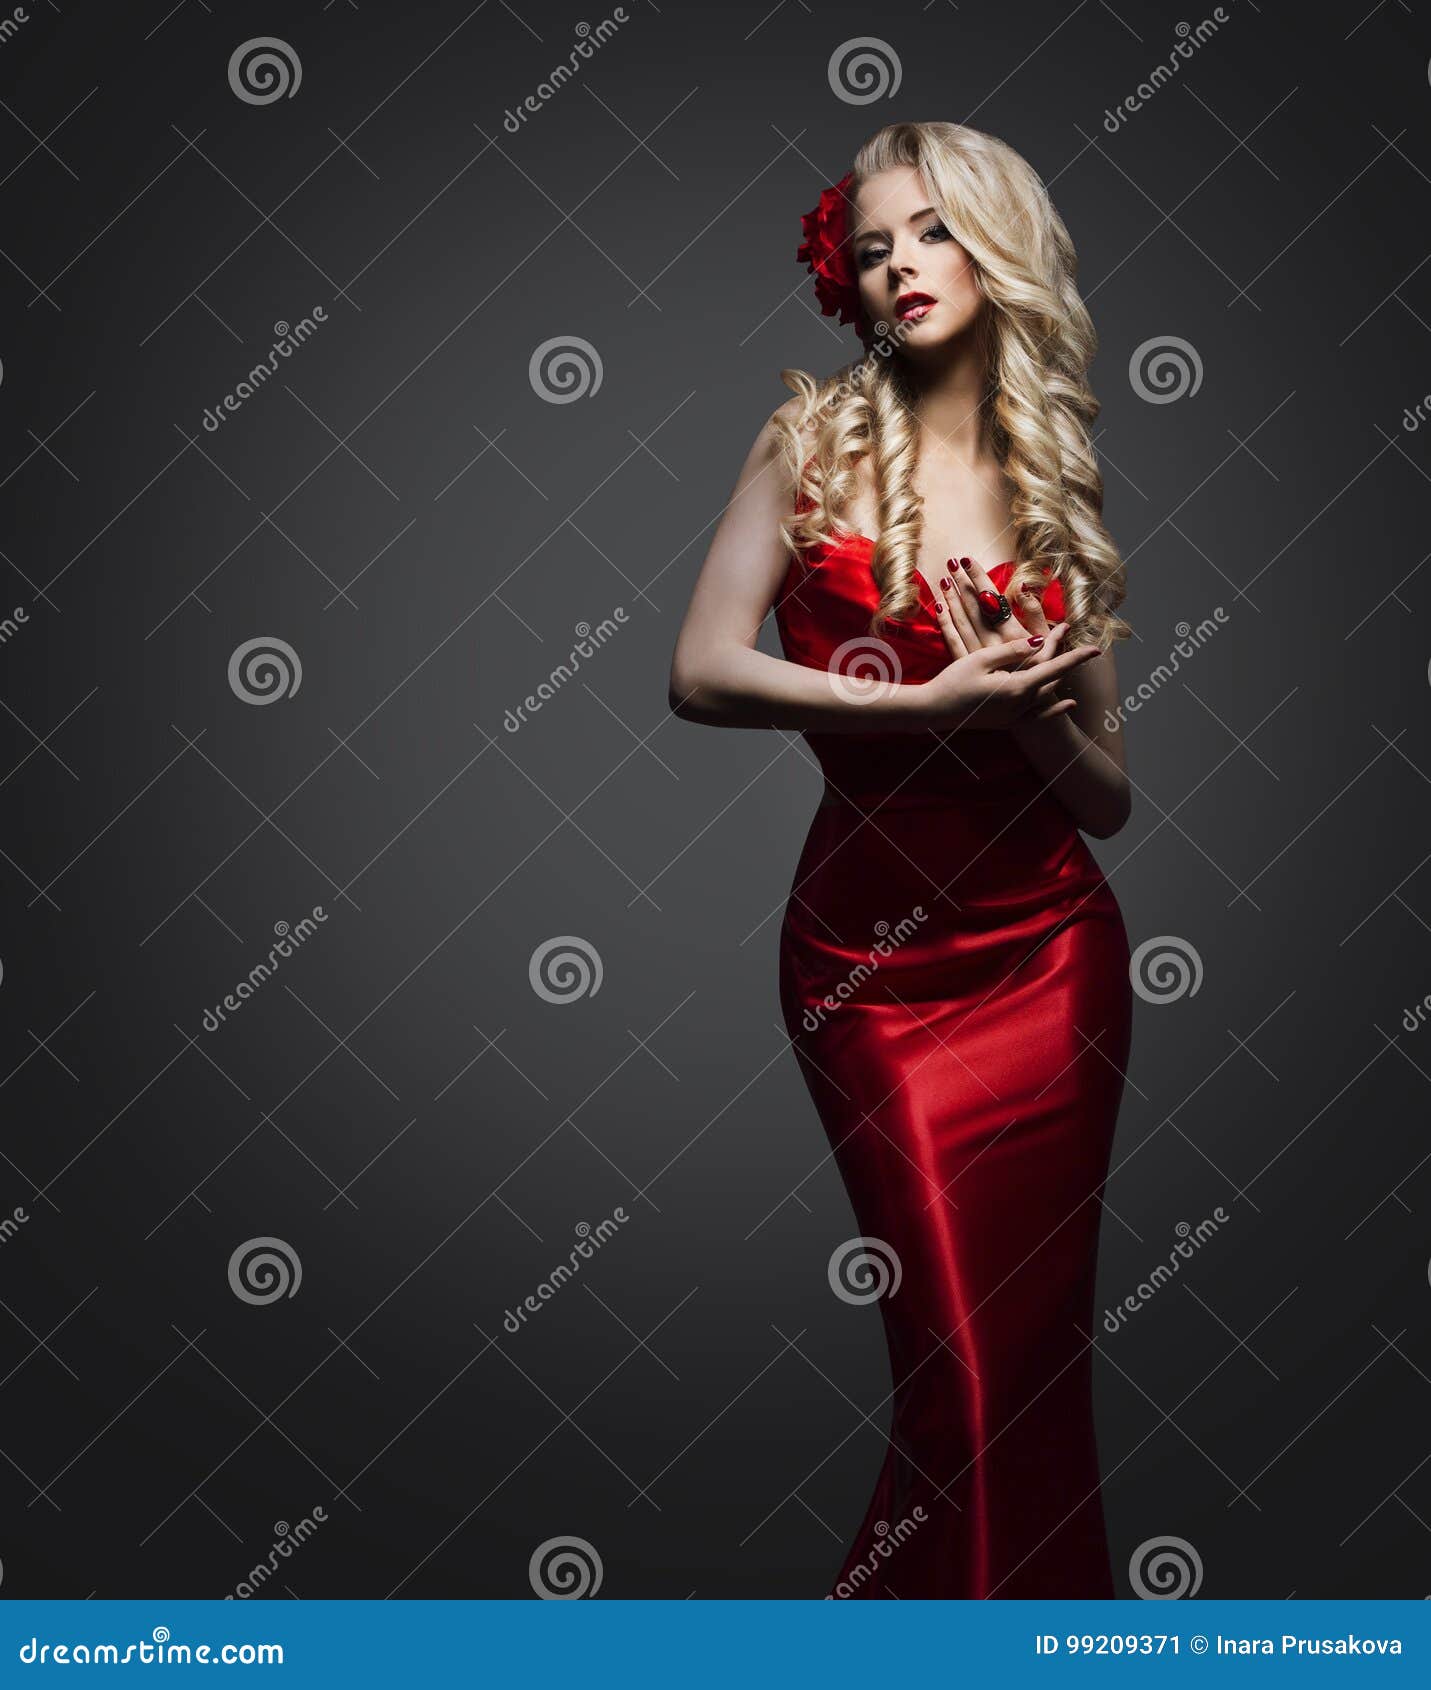 elegant lady dress, fashion model in red gown, beautiful woman